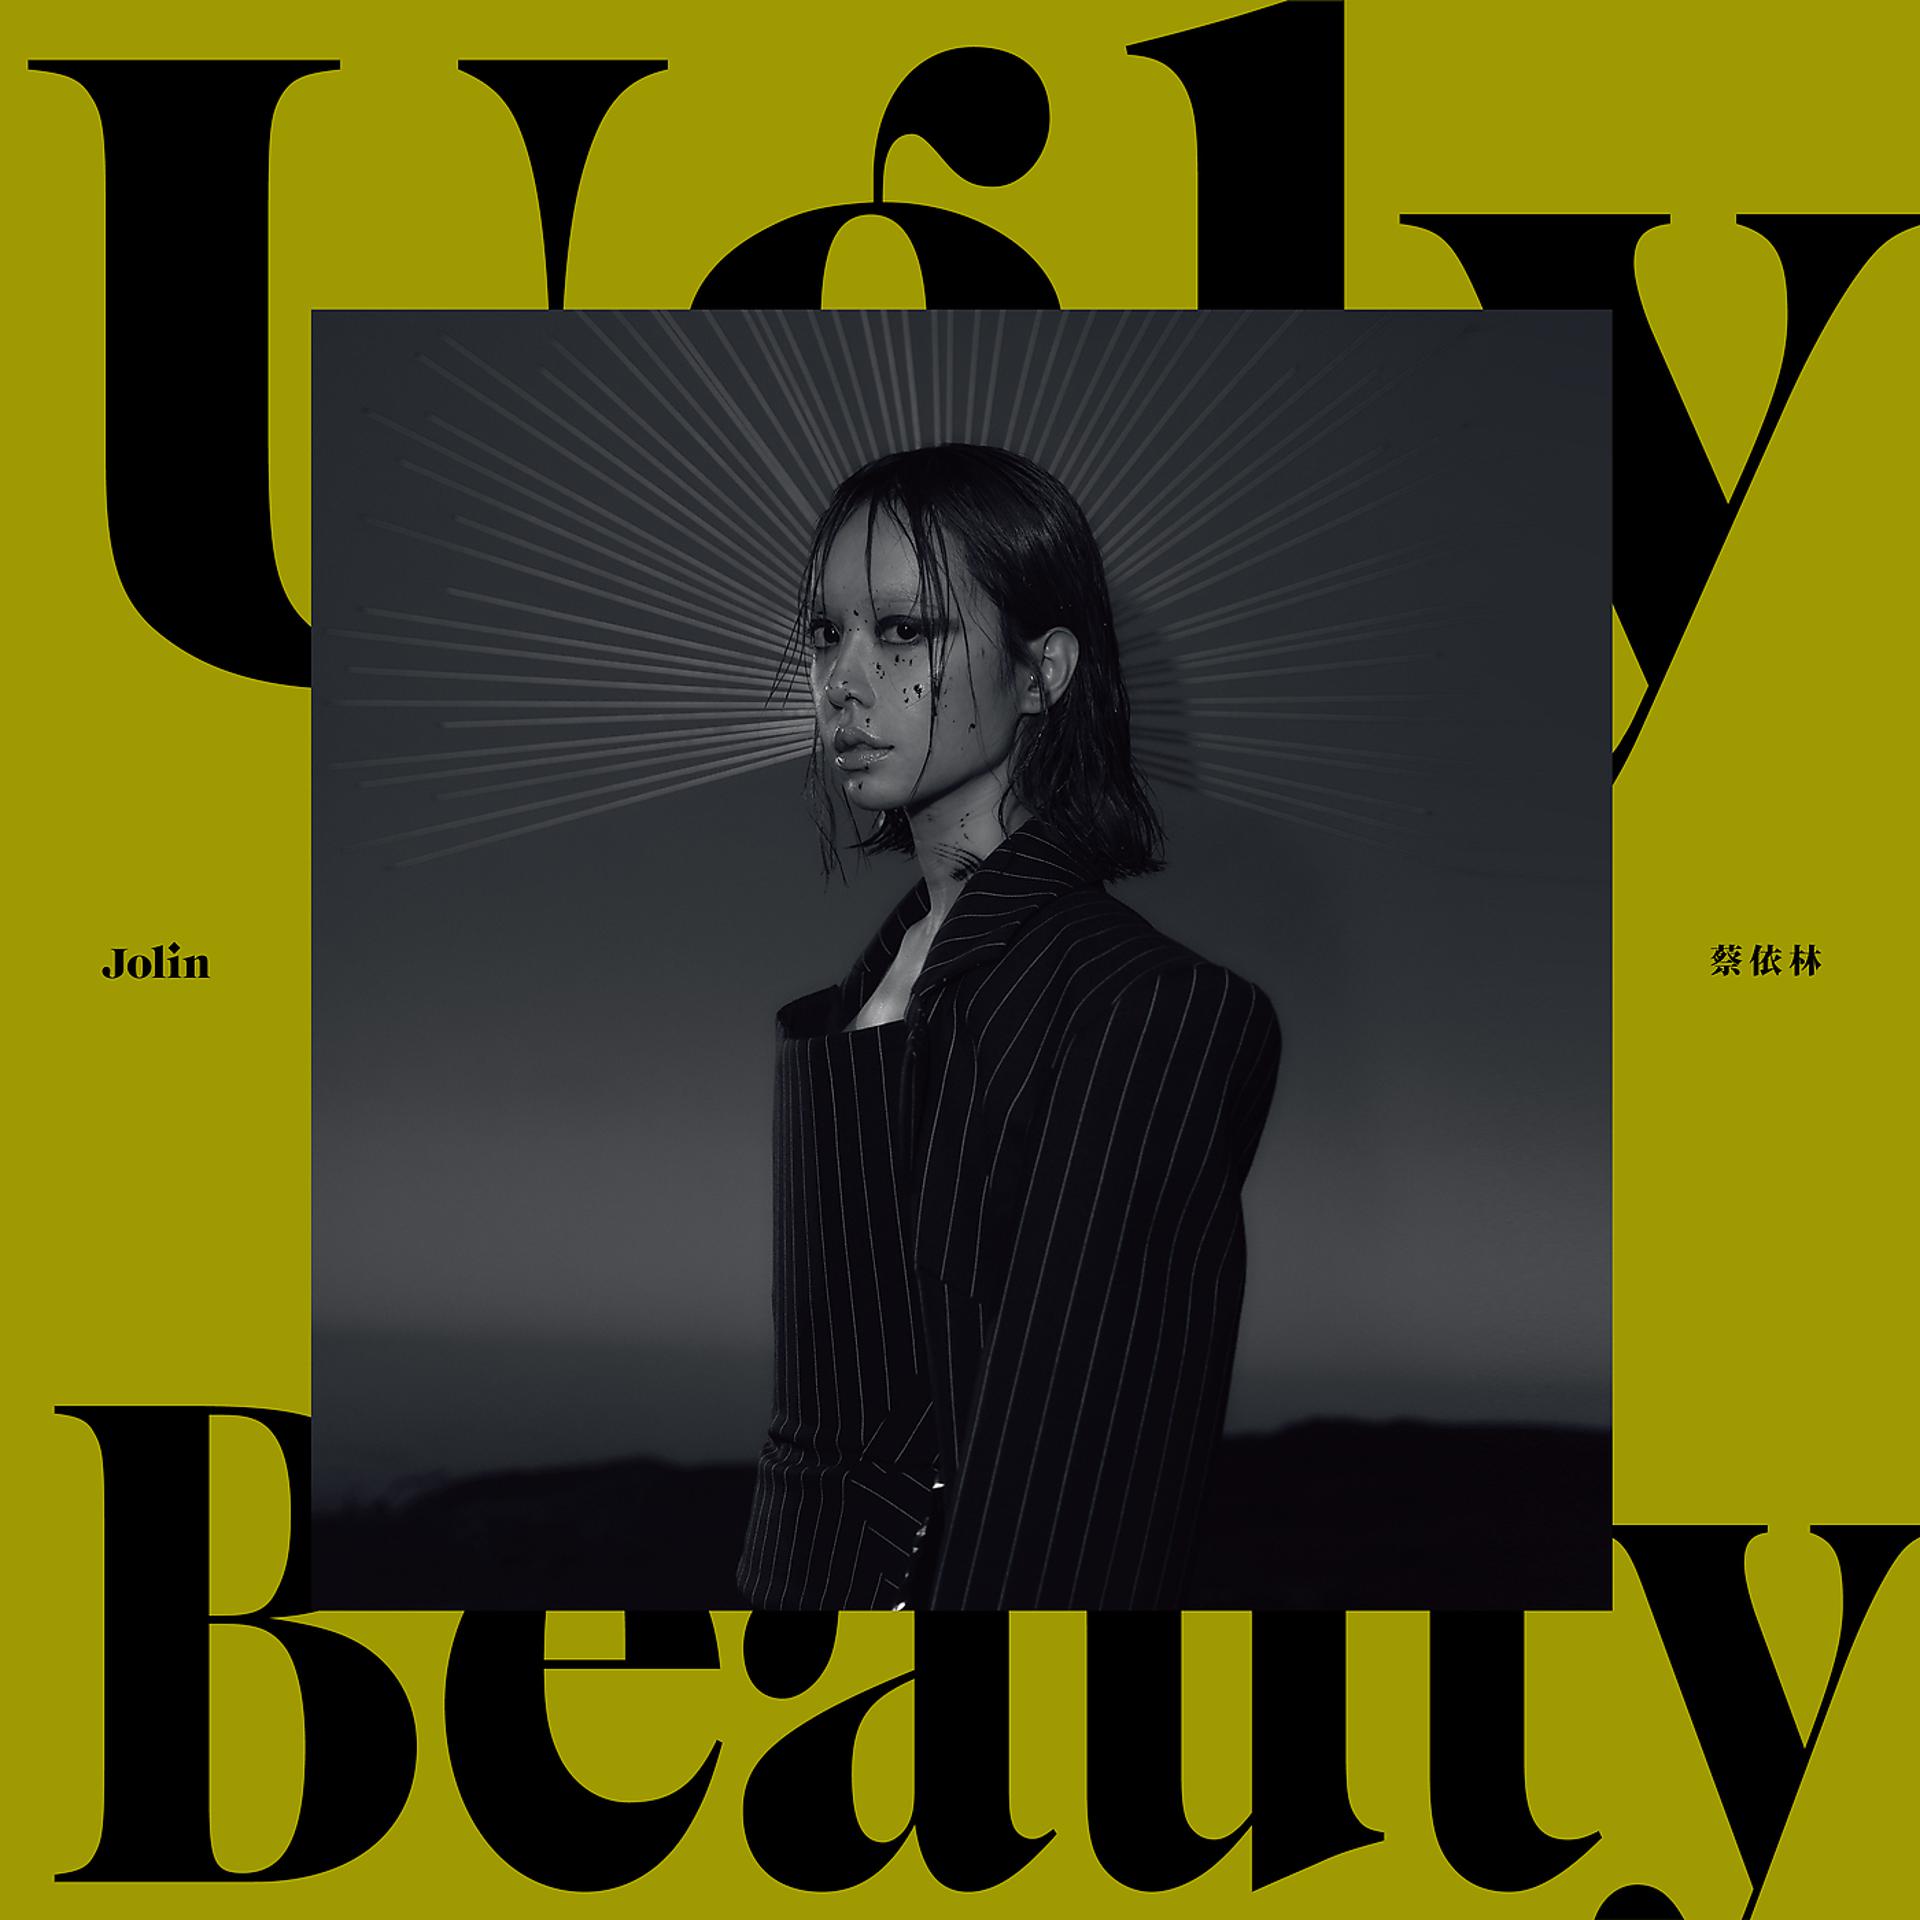 Постер альбома Ugly Beauty